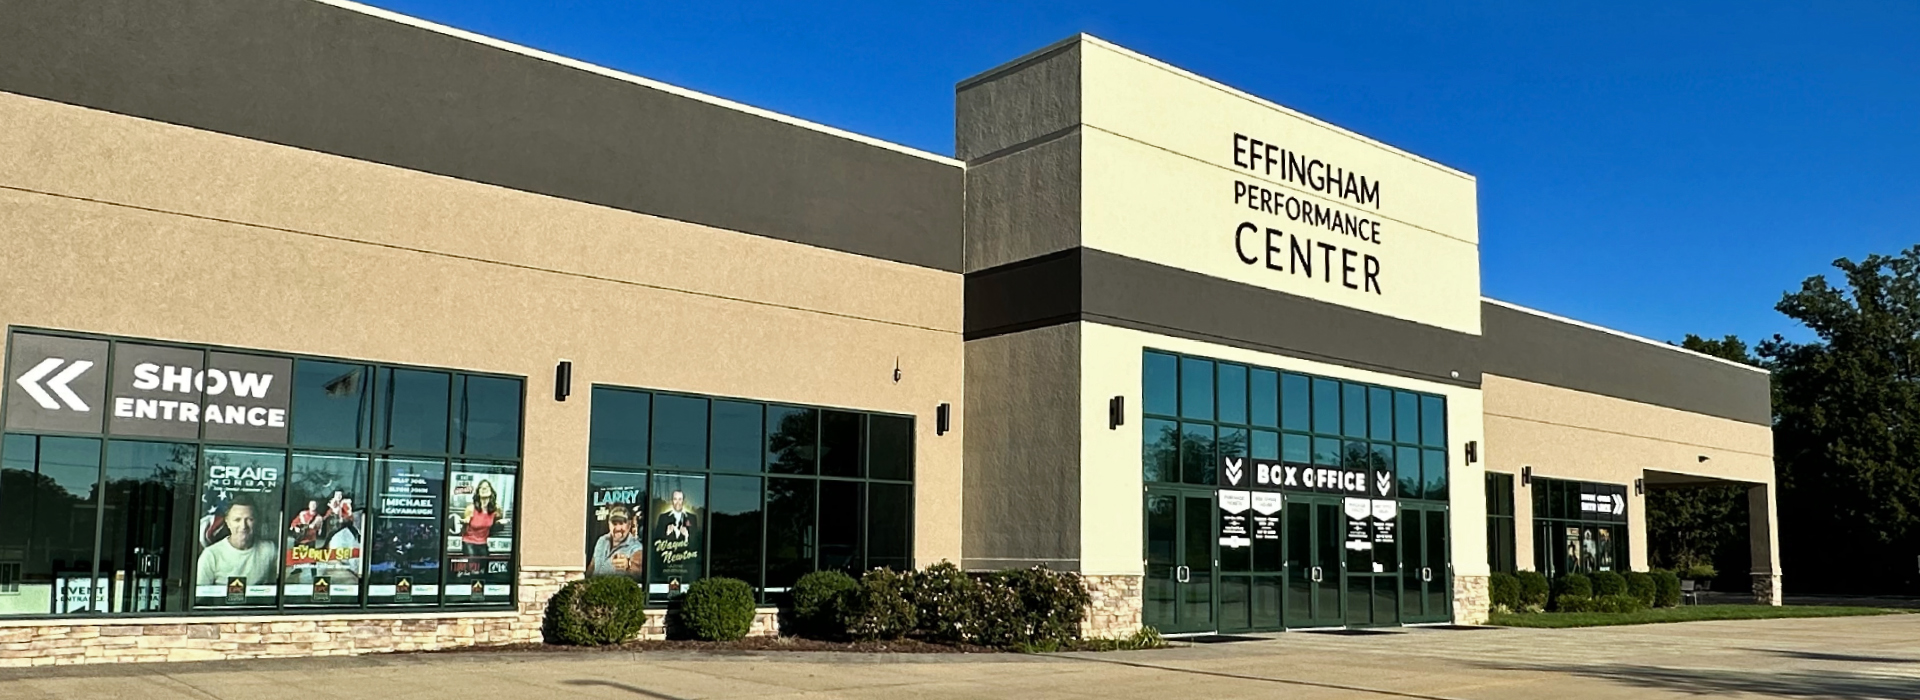 Effingham Performance Center Building